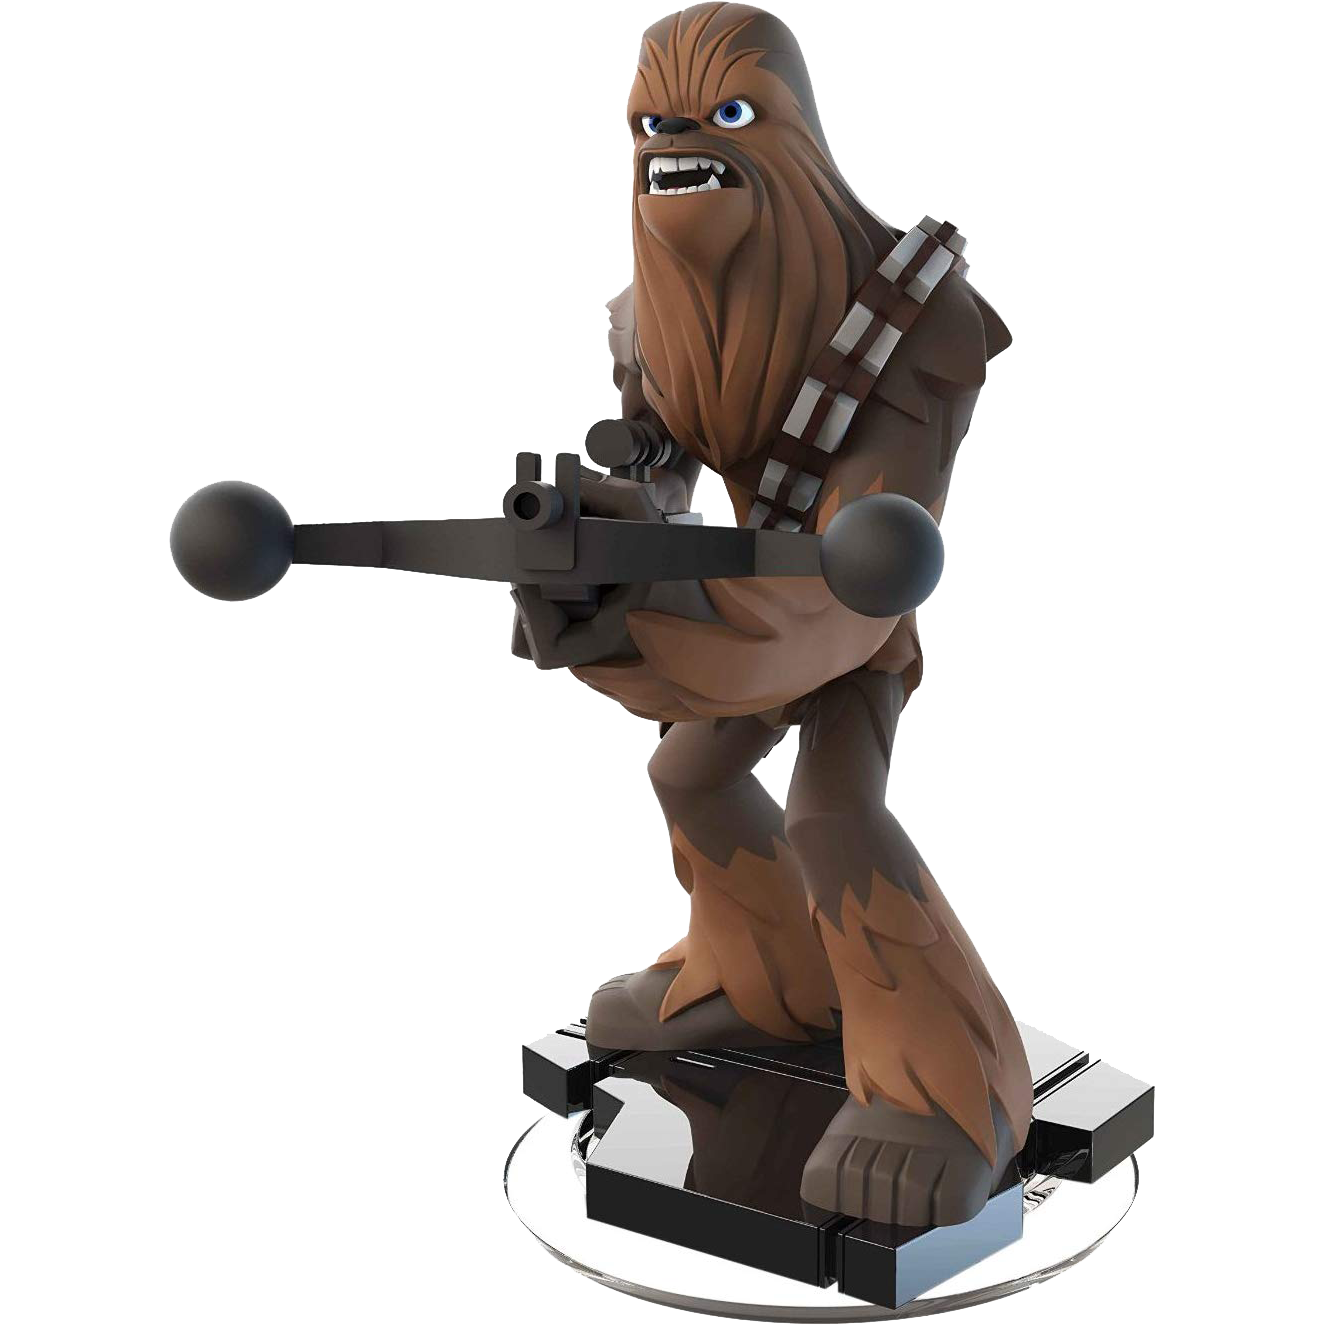 Disney Infinity 3.0 - Chewbacca Figure